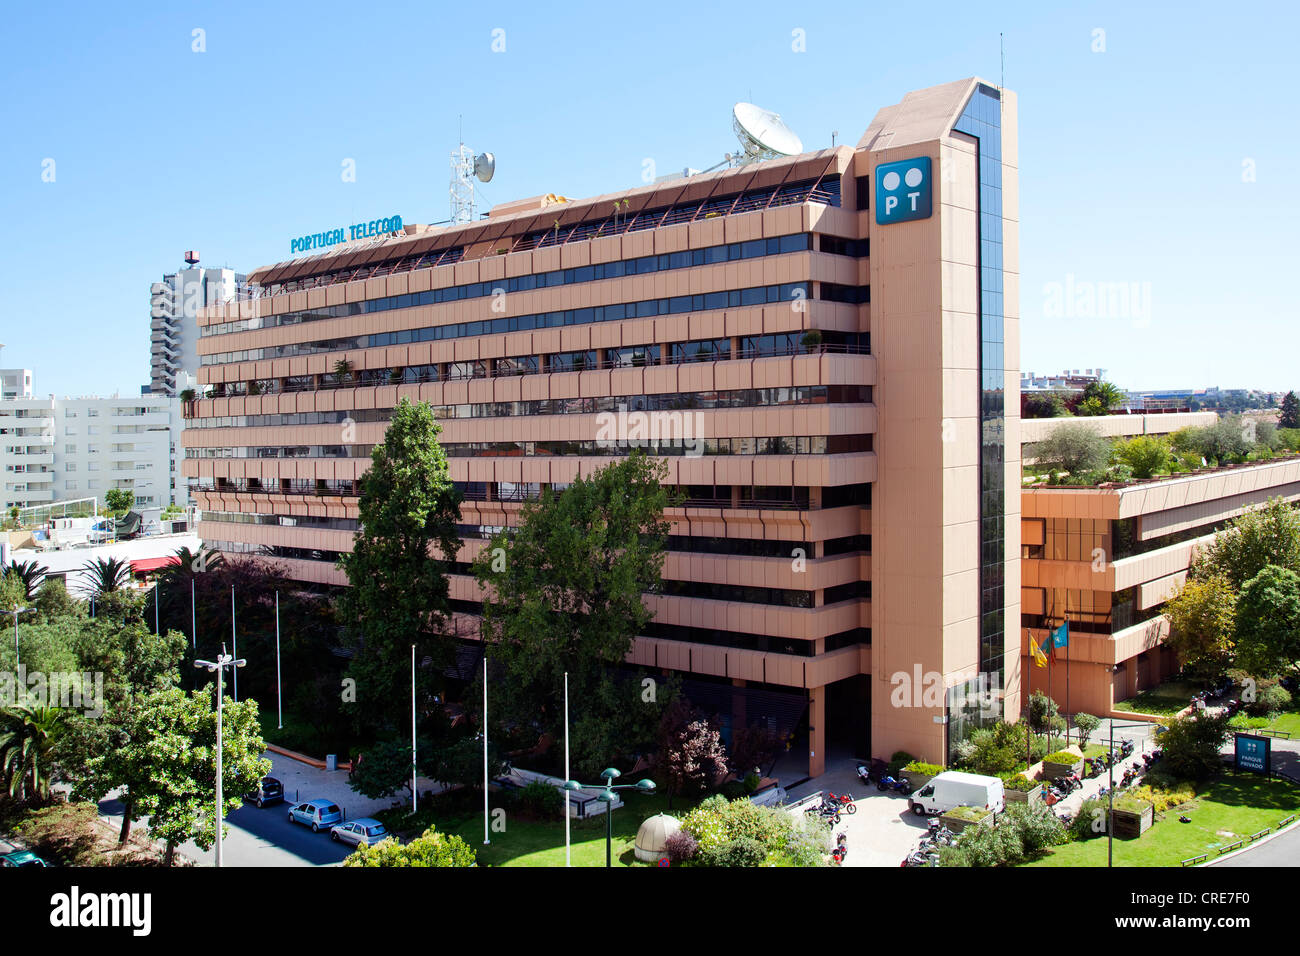 Headquarters of the Portuguese telecommunications company, Portugal Telecom, PT, in Lisbon, Portugal, Europe Stock Photo